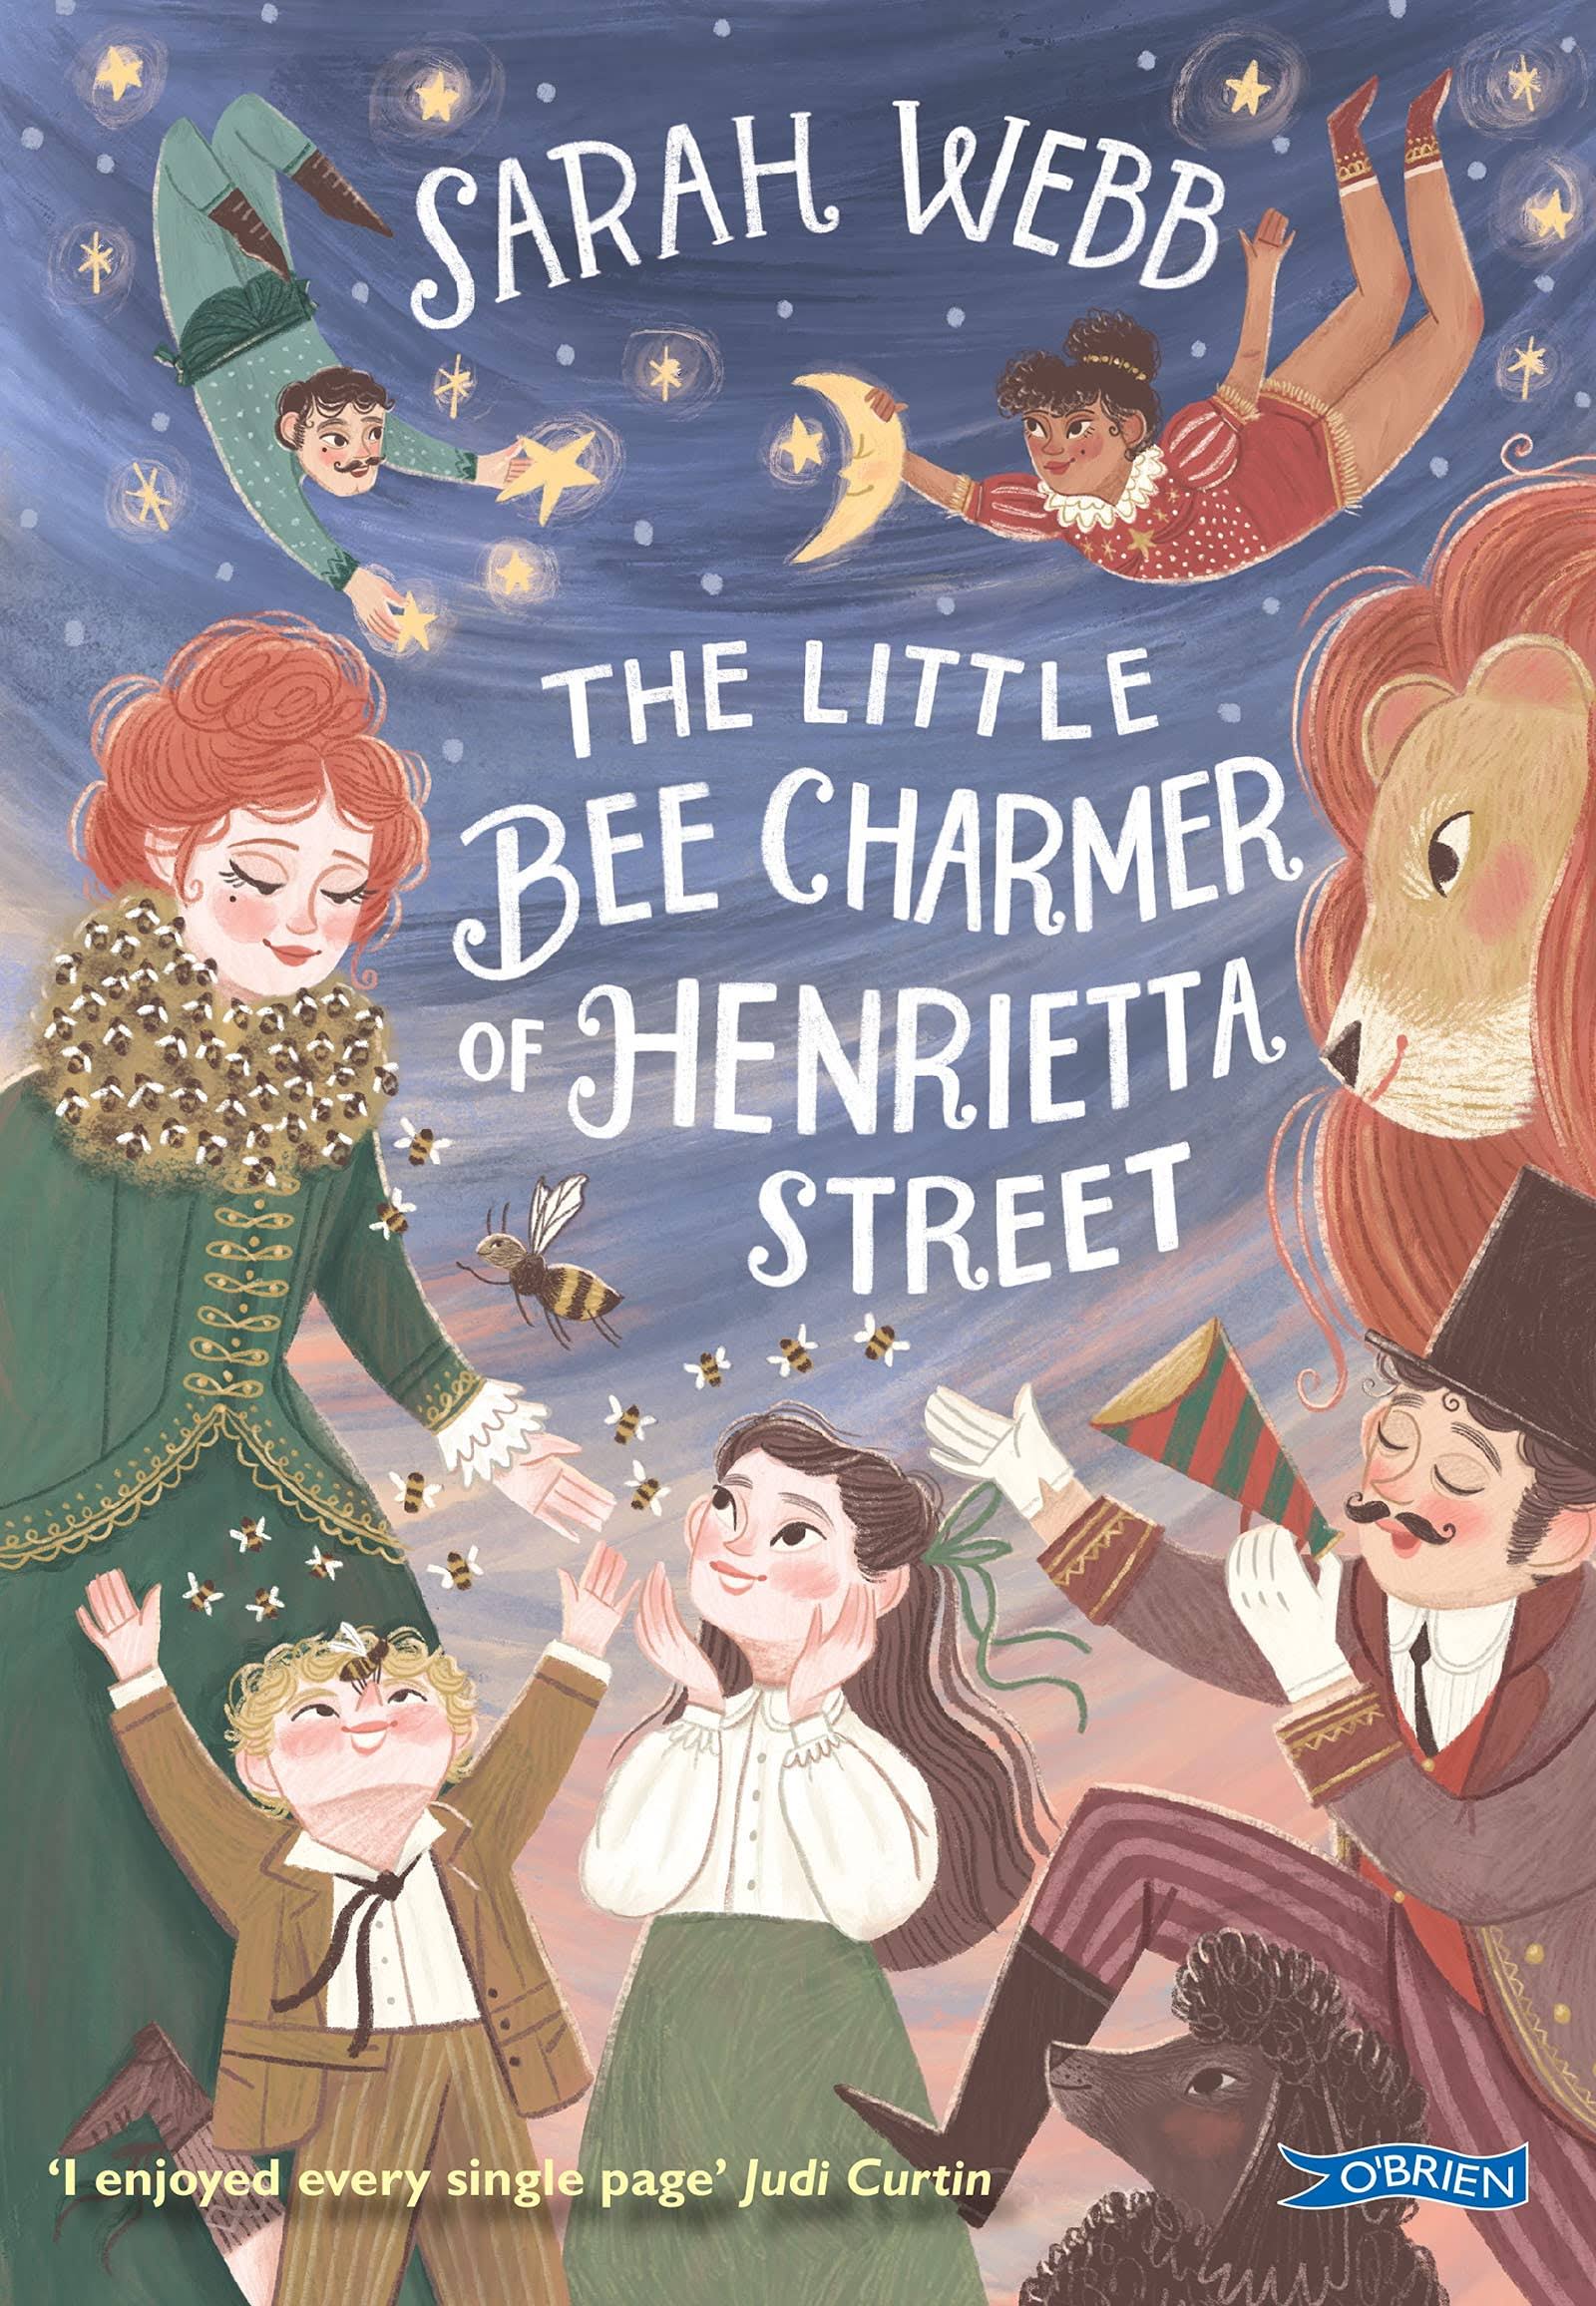 The Little Bee Charmer of Henrietta Street by Sarah Webb